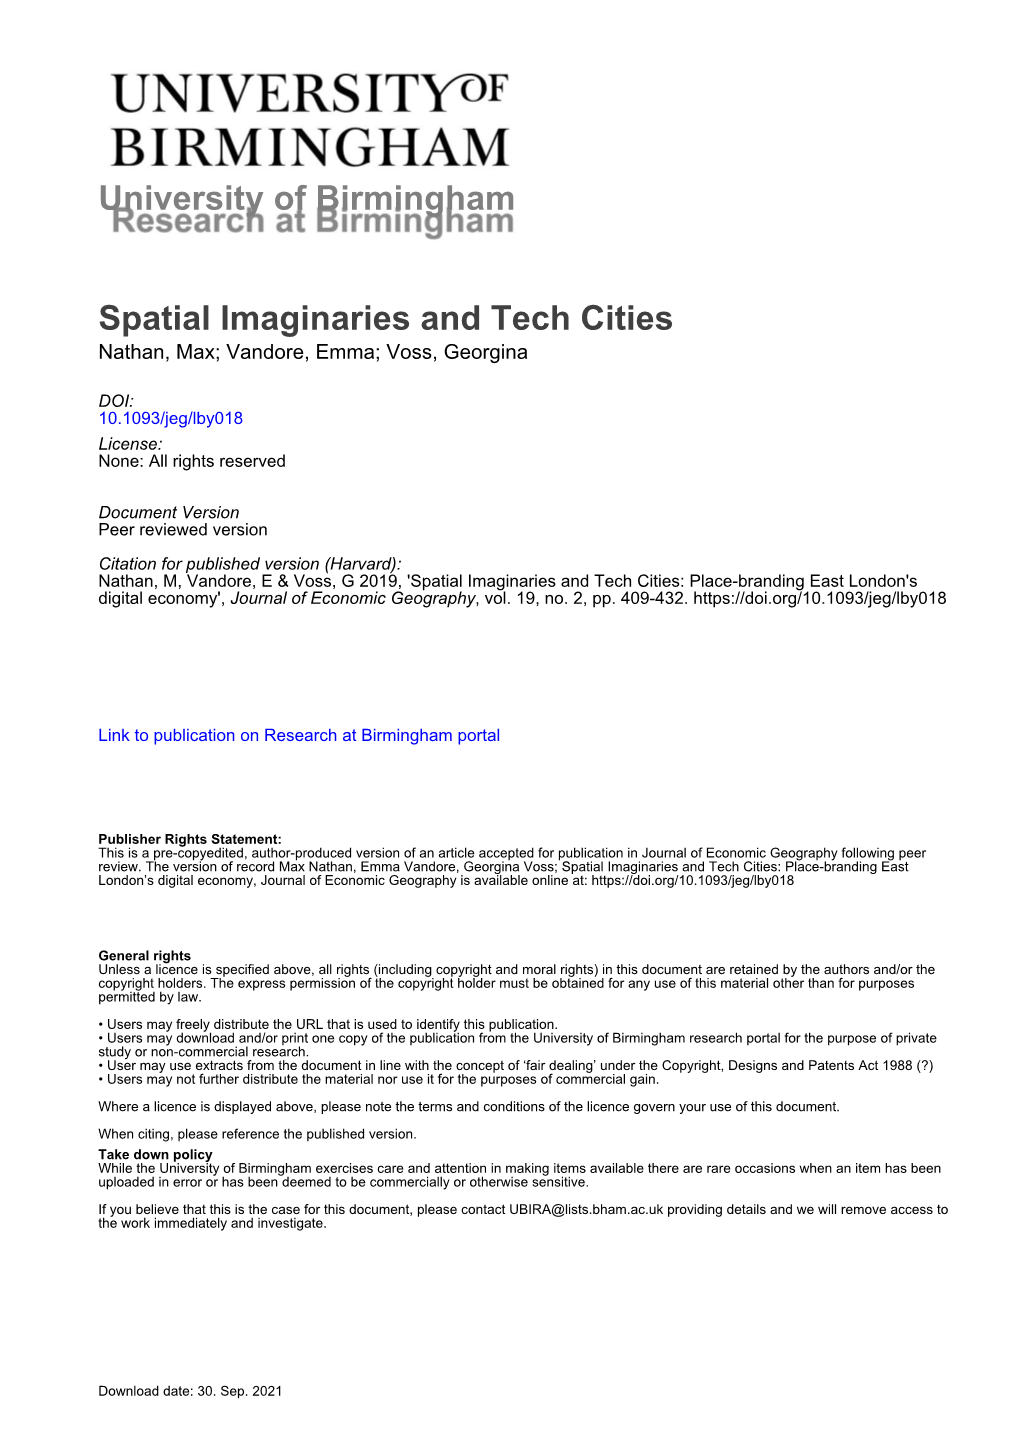 University of Birmingham Spatial Imaginaries and Tech Cities